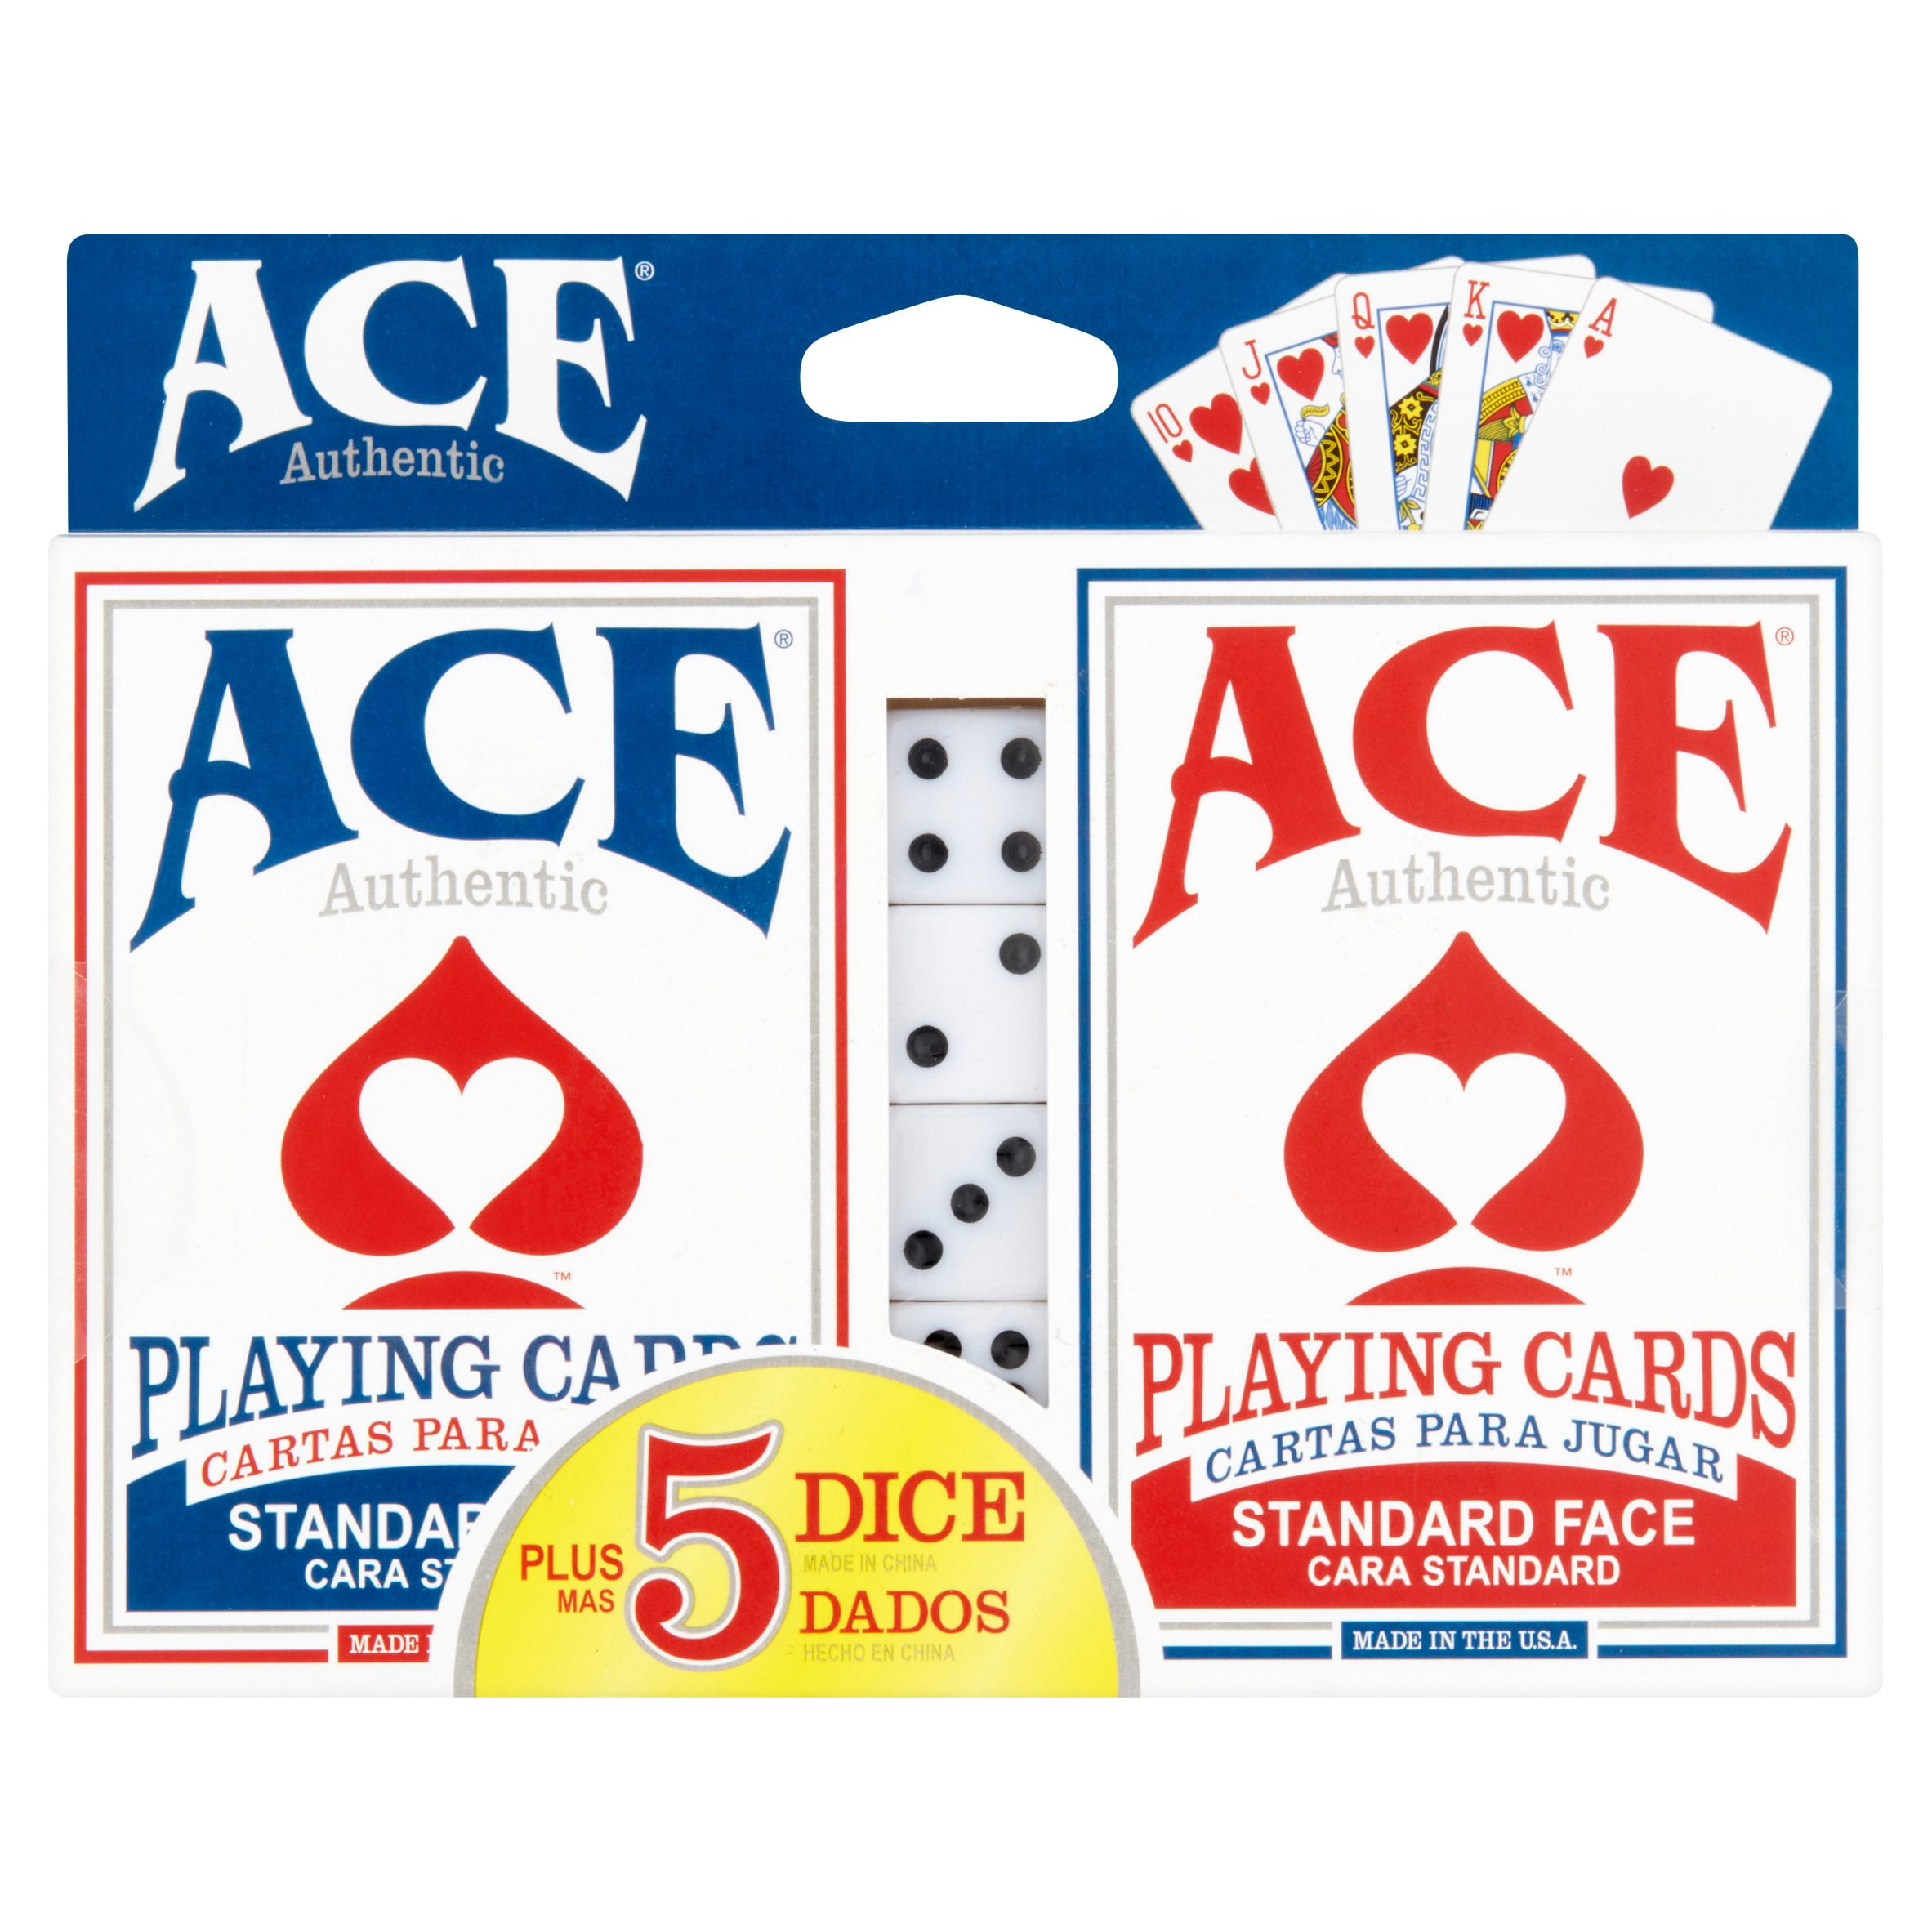 ACE Authentic 10 Pack Standard Spot Dice Cartamundi Die New & Sealed.13 